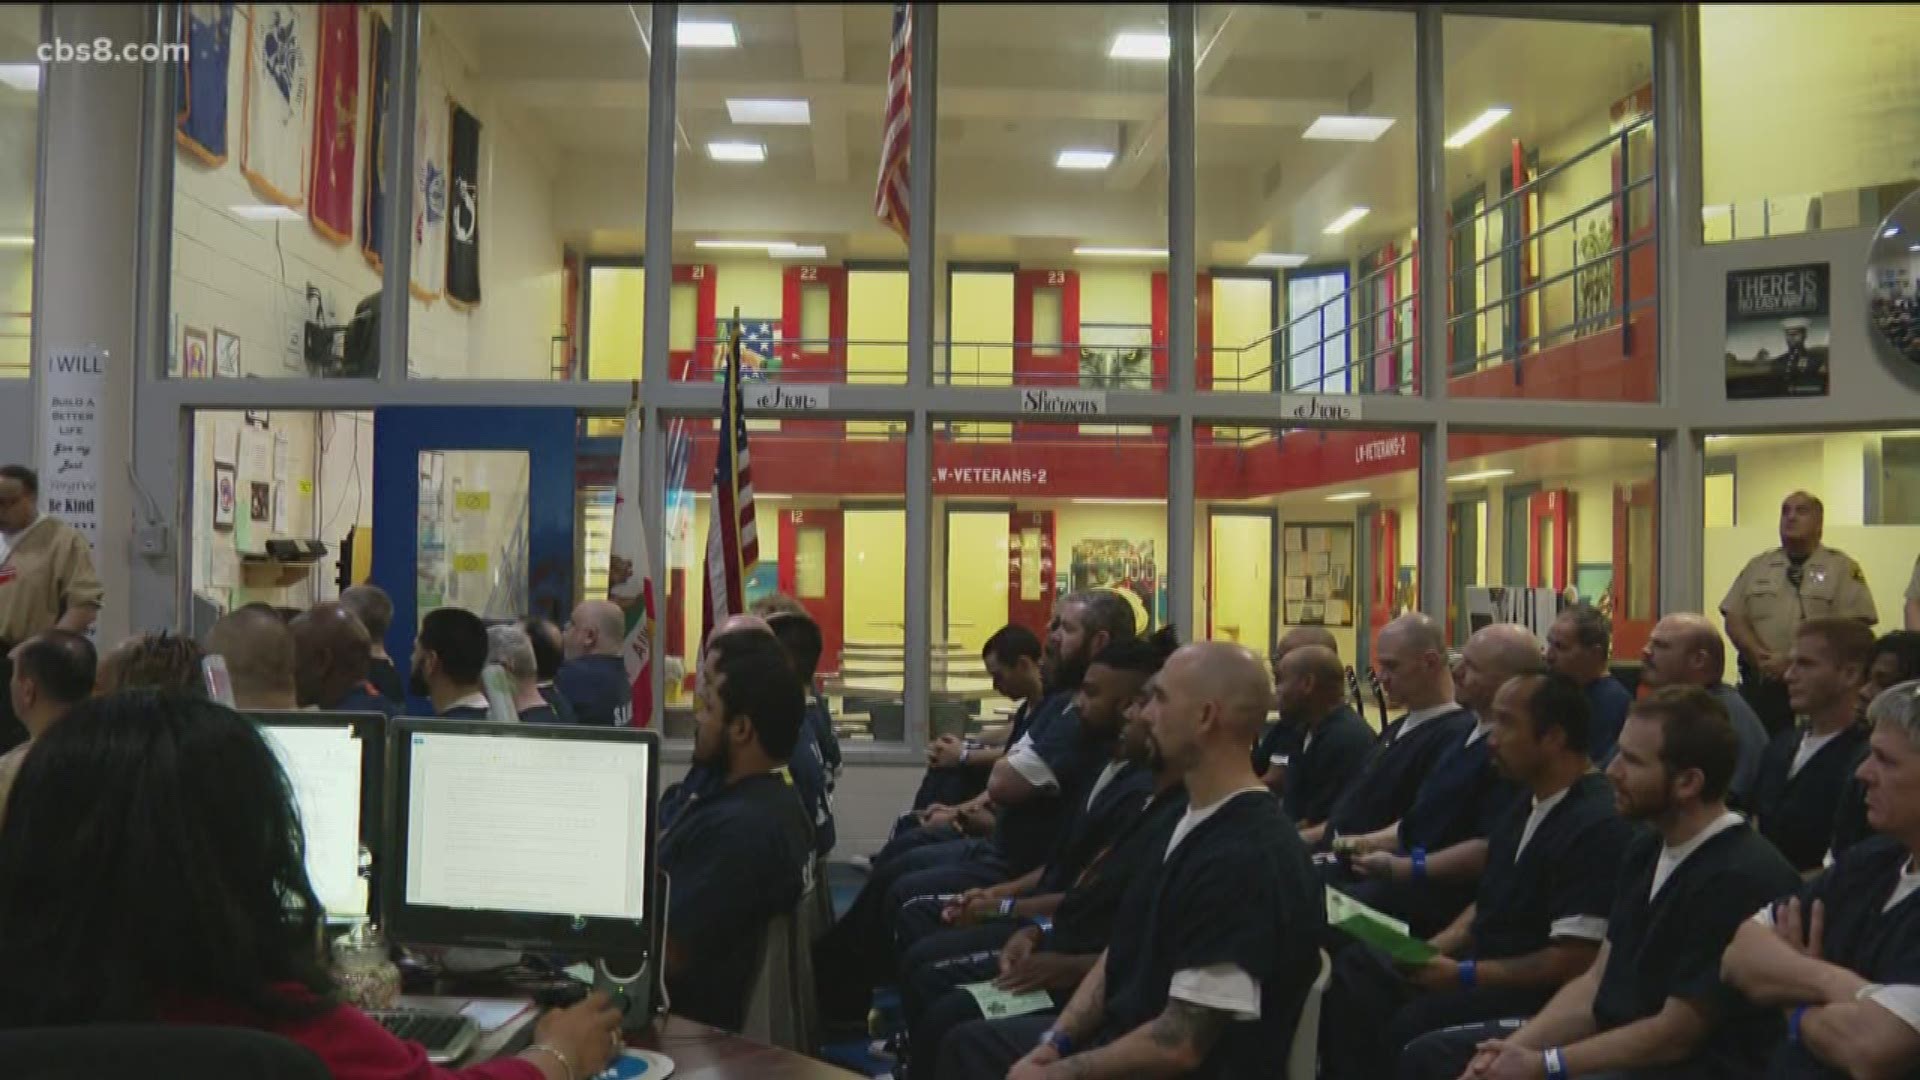 Vista jail program celebrated as model for helping veterans ‘moving